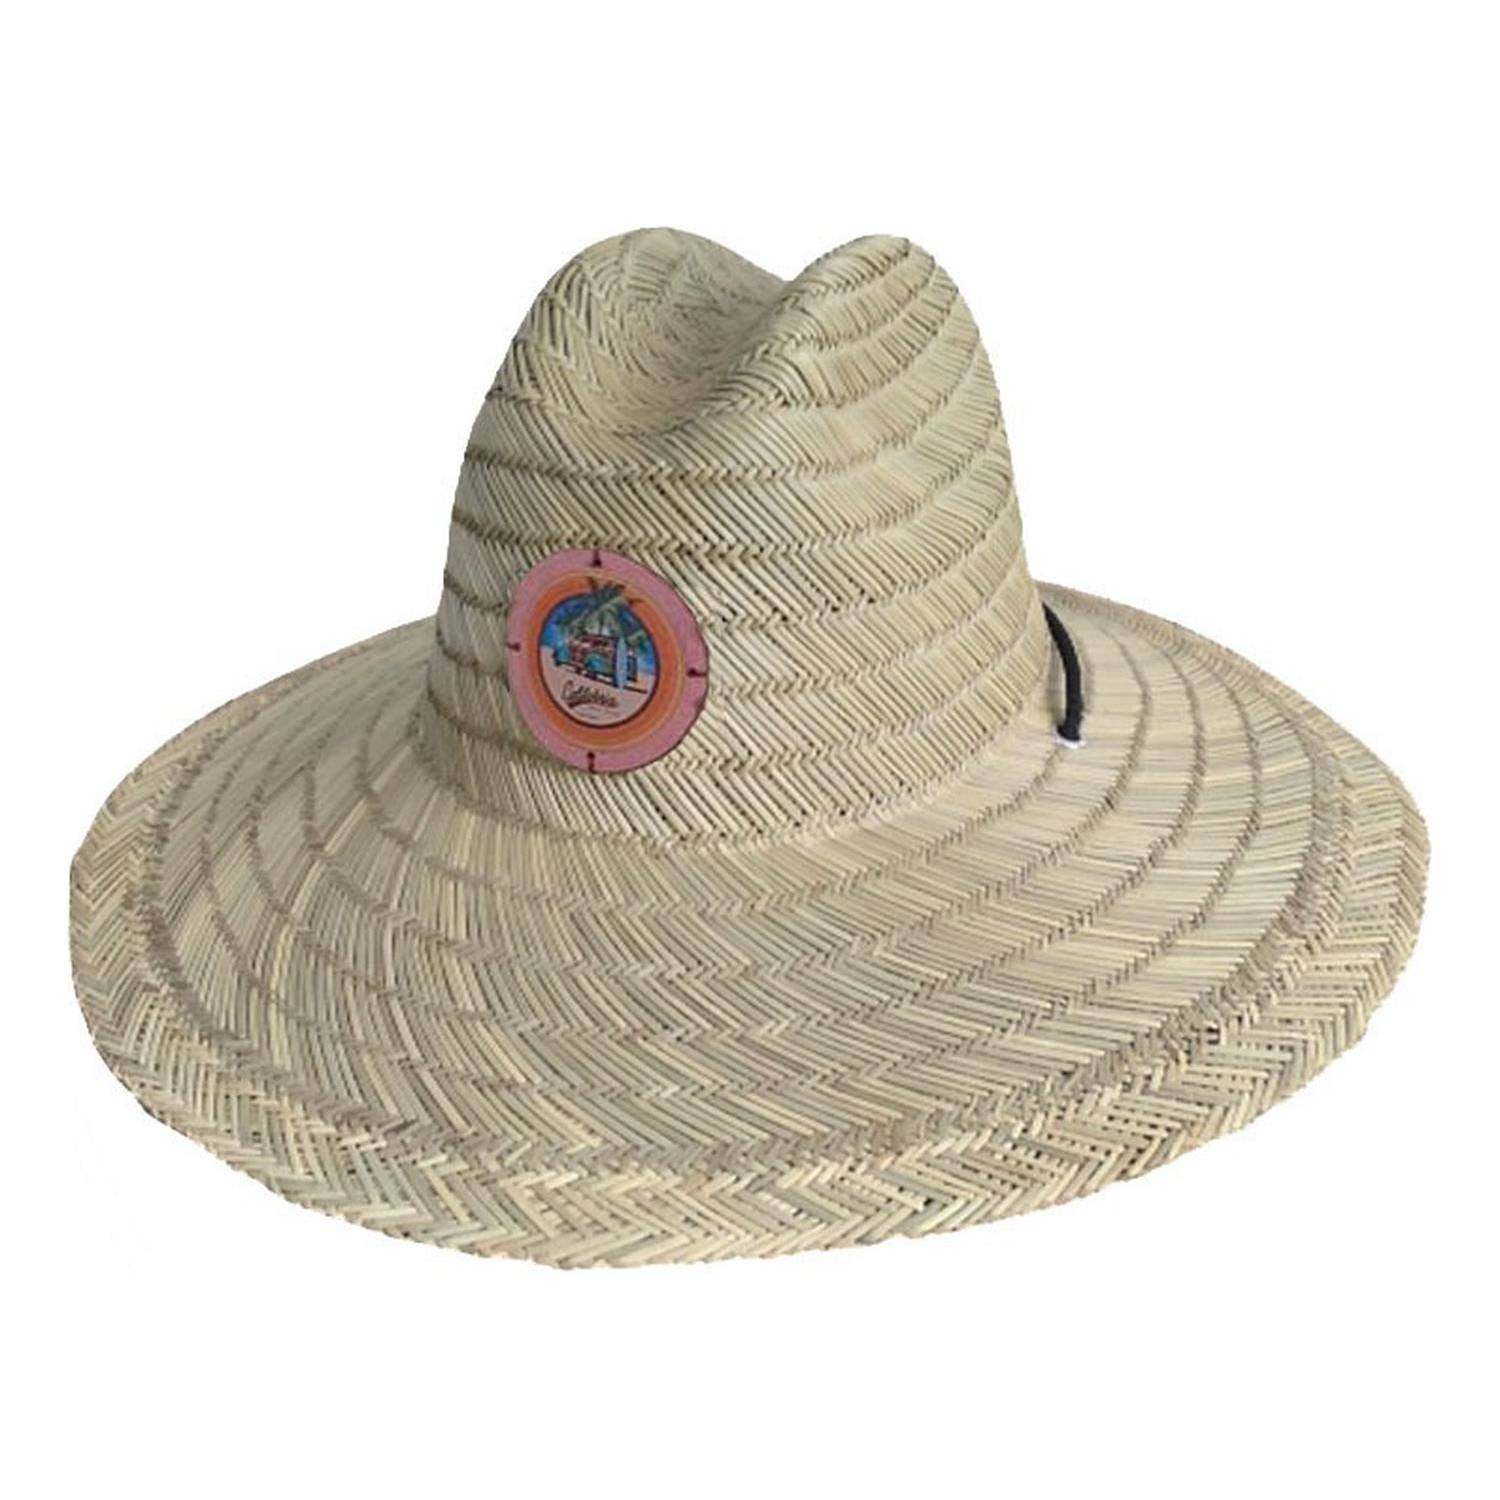 Sombrero Tipo Quiksilver Paja Artesanal Playa Hombre Mujer - Beige VELBROS